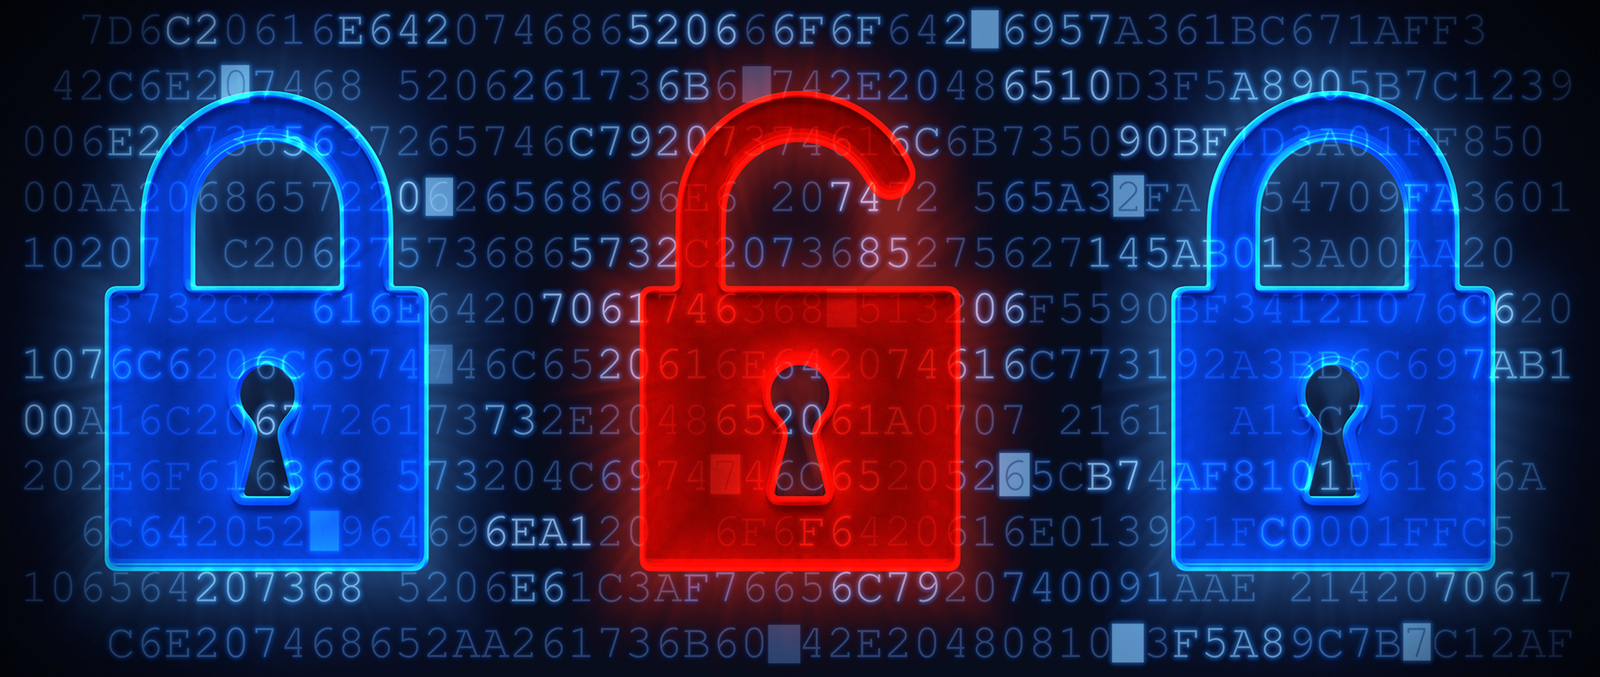 Cyber security locks code image